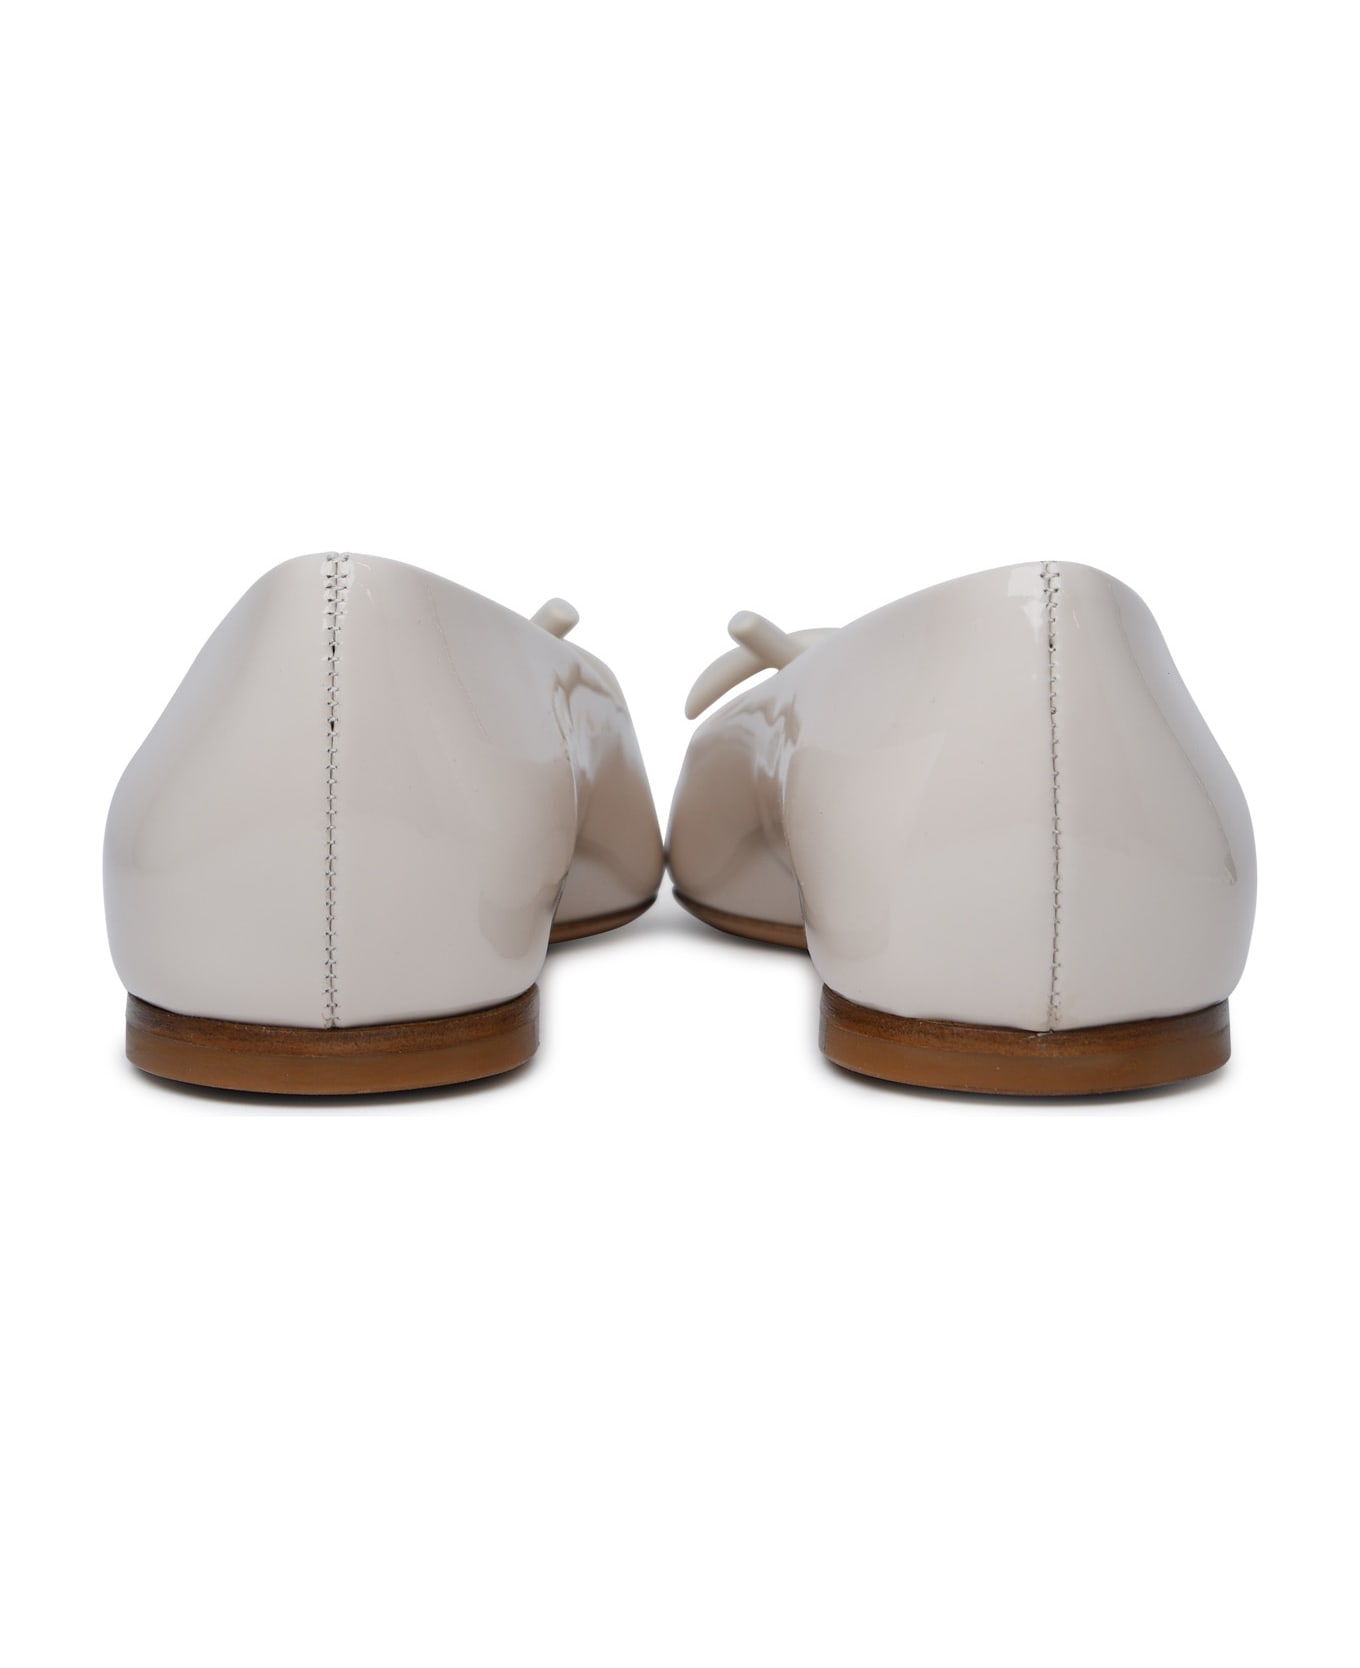 Ferragamo 'annie' Ballet Flats In Mascarpone Calf Leather - White フラットシューズ